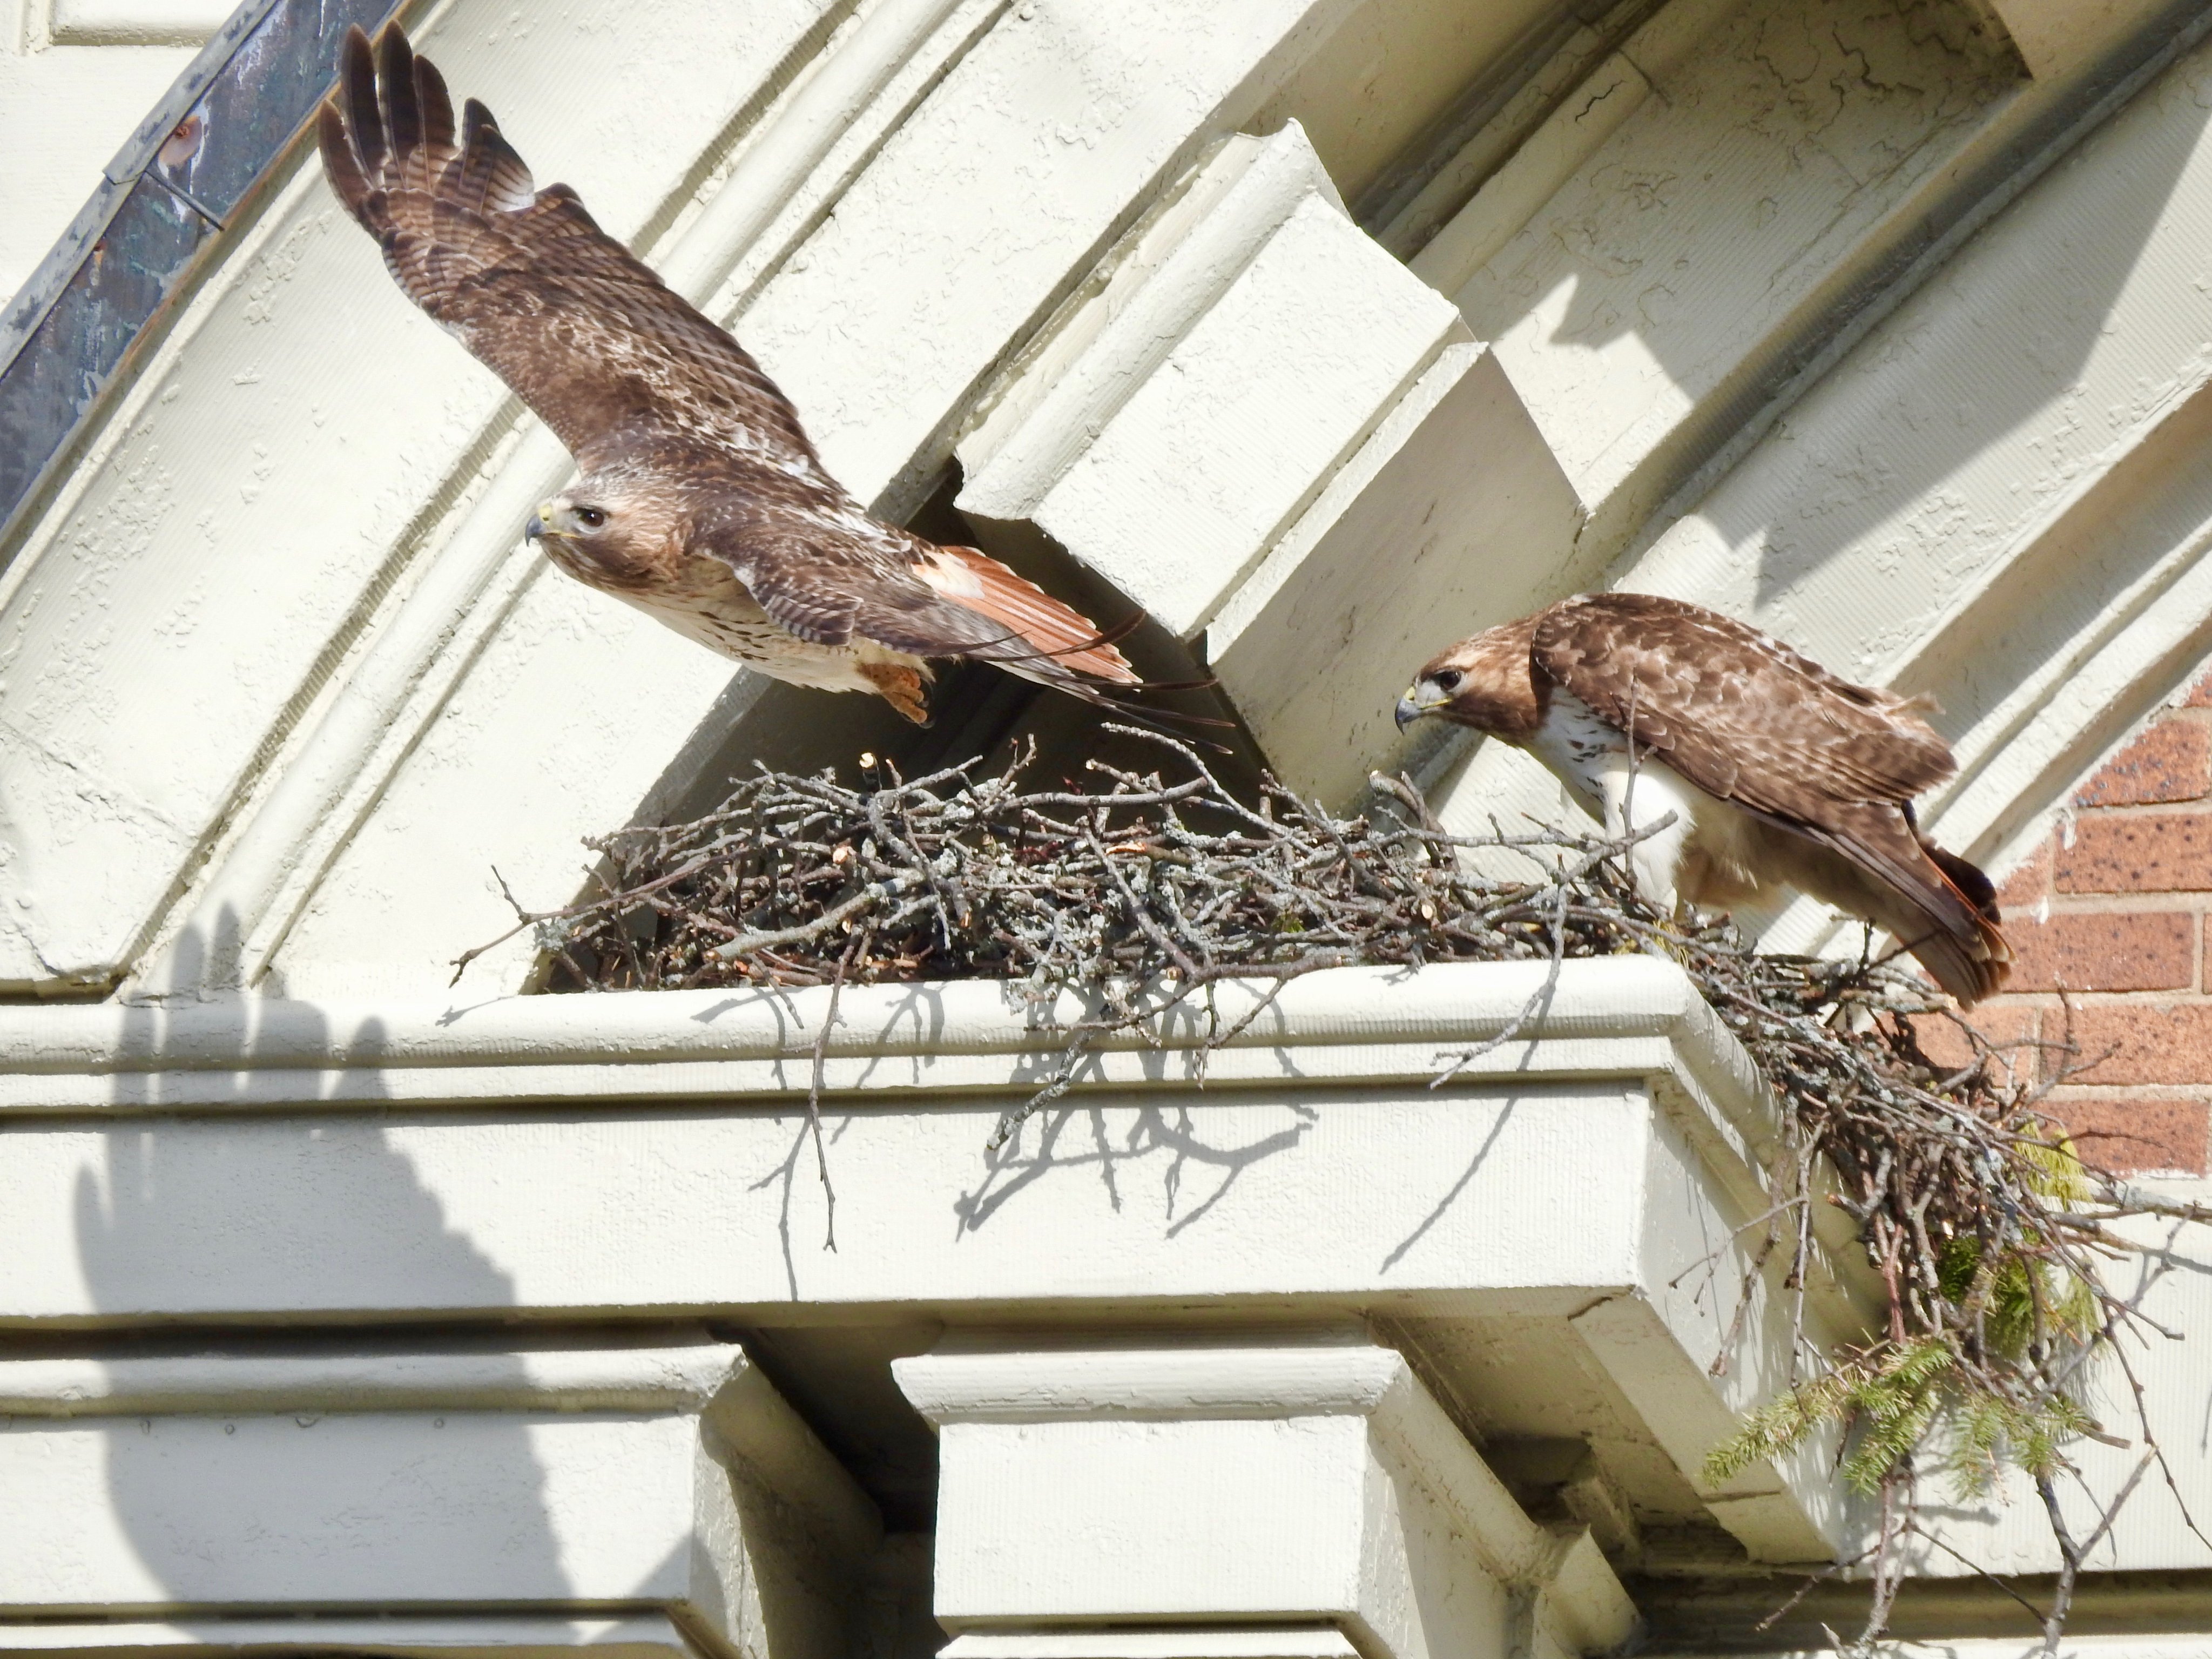 Two hawks, one in flight as it leaves the nest.